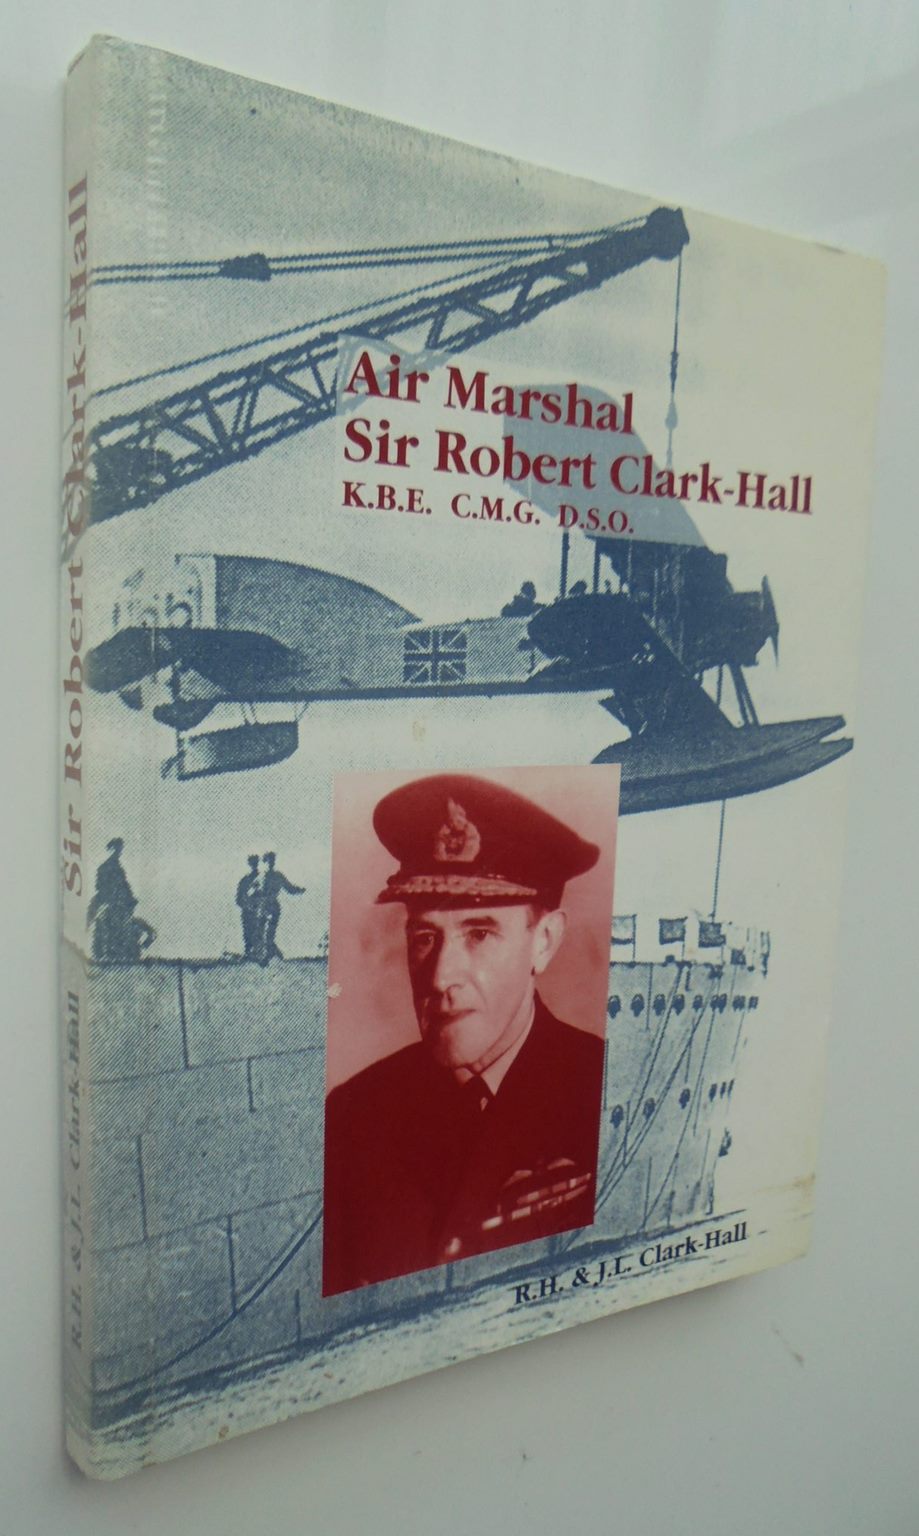 Air Marshall Sir Robert Clark-Hall Autobiographical & Biographical Reminiscences